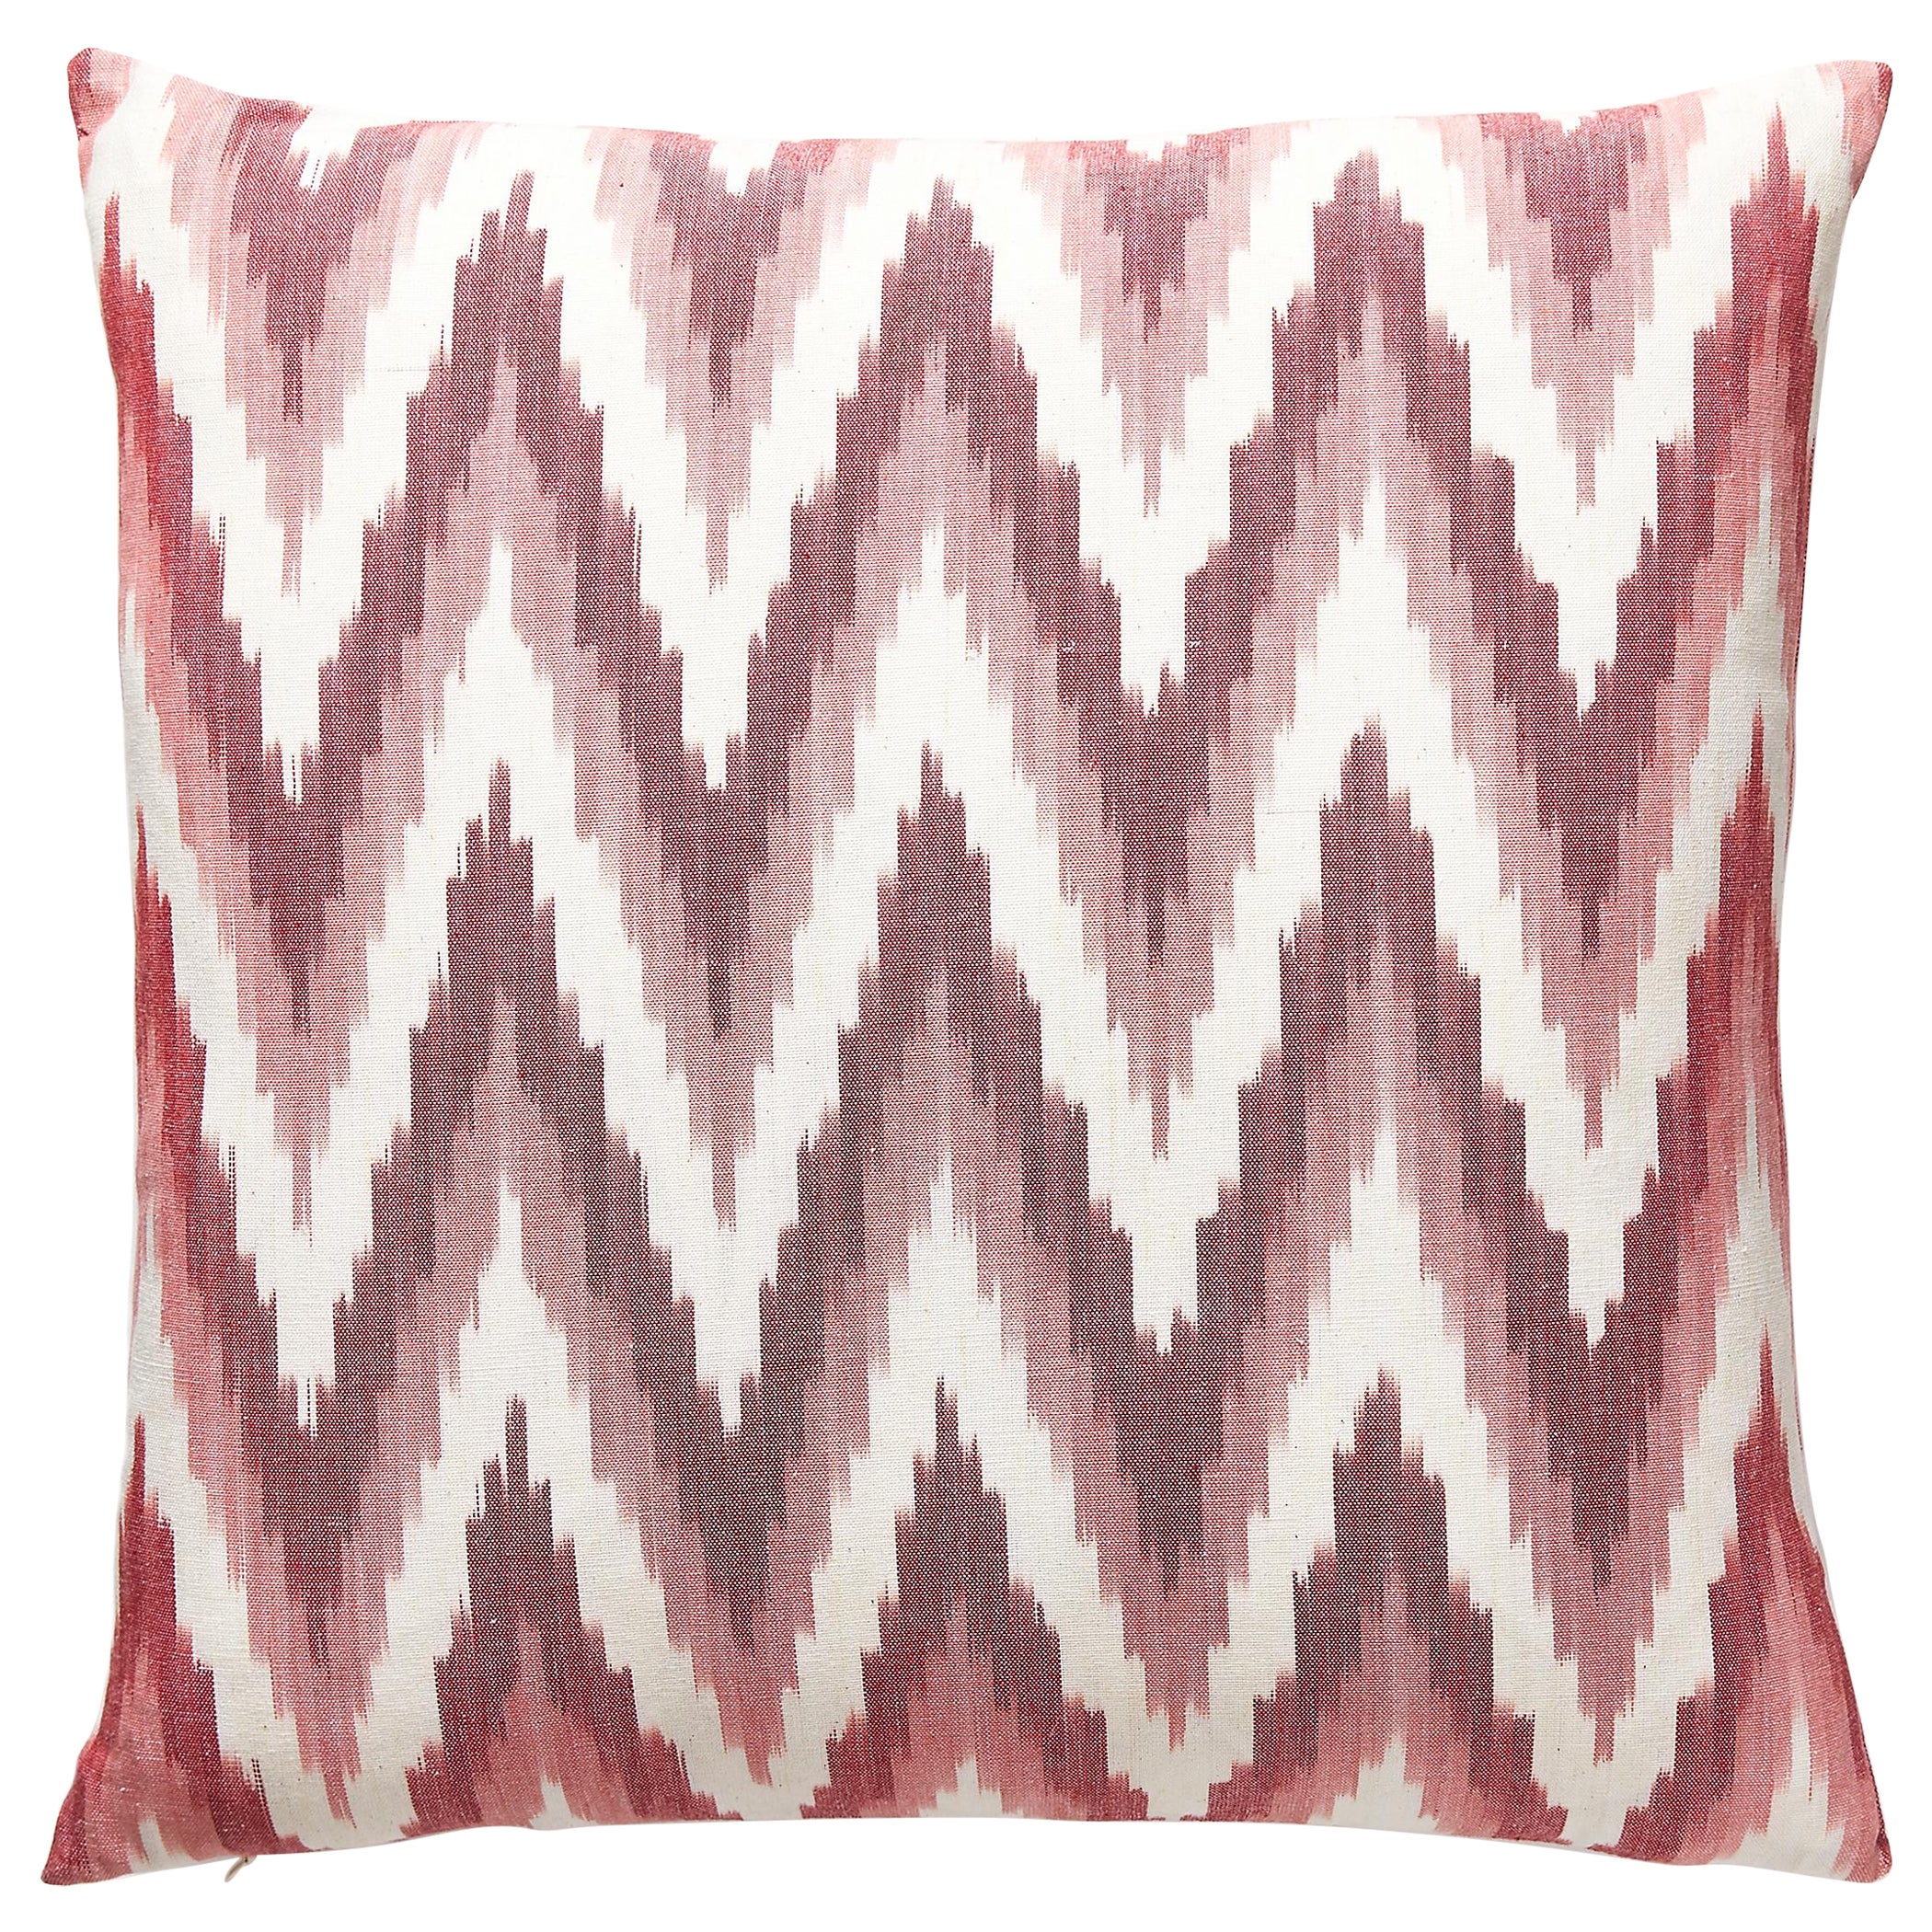 Adras Ikat Weave Pillow For Sale